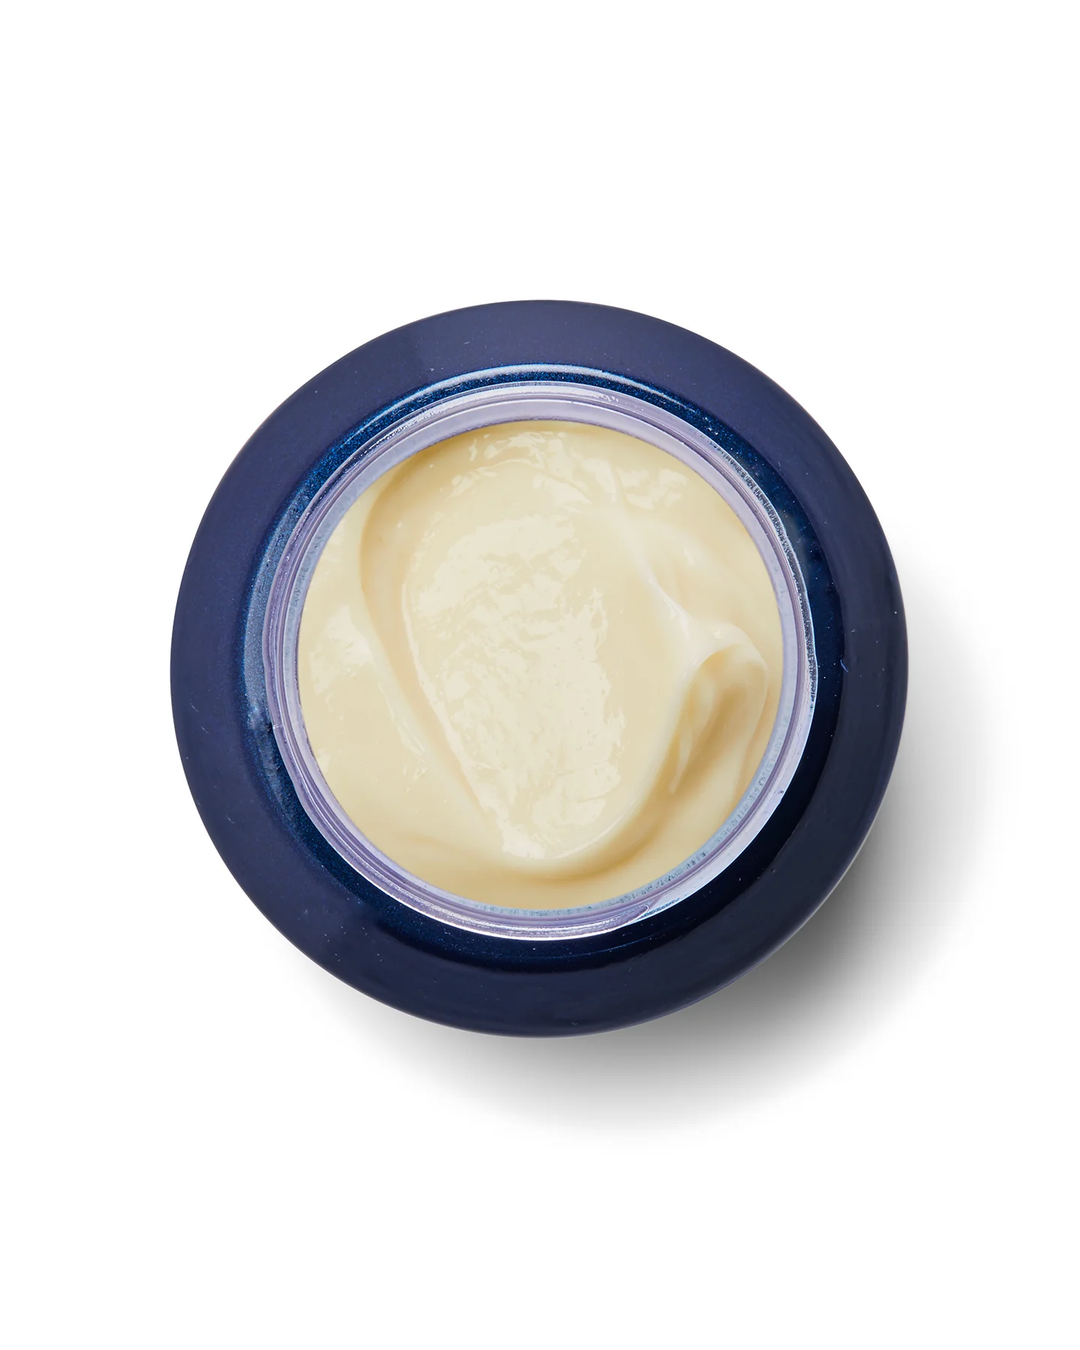 Naturopathica Argan & Retinol Advanced Wrinkle Remedy Night Gel Cream open